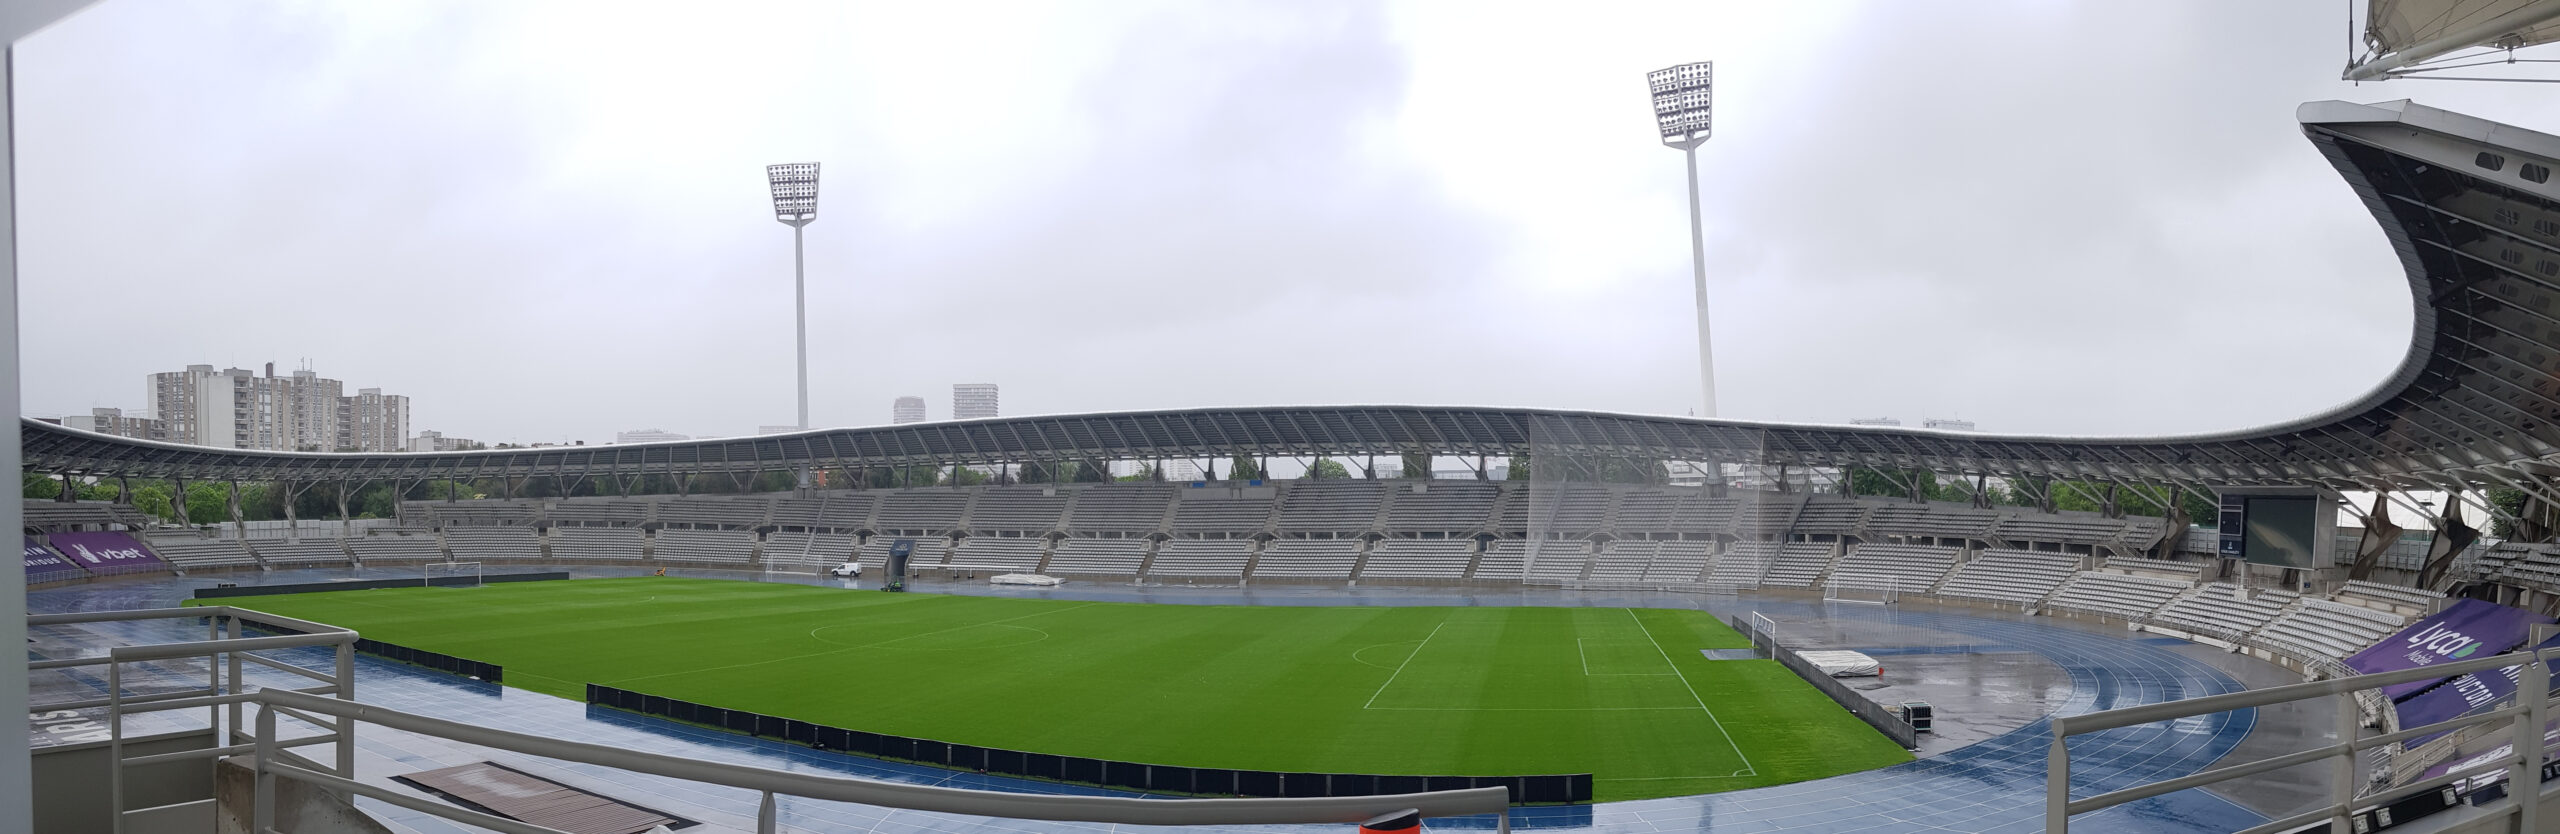 Stade Charléty - Paris